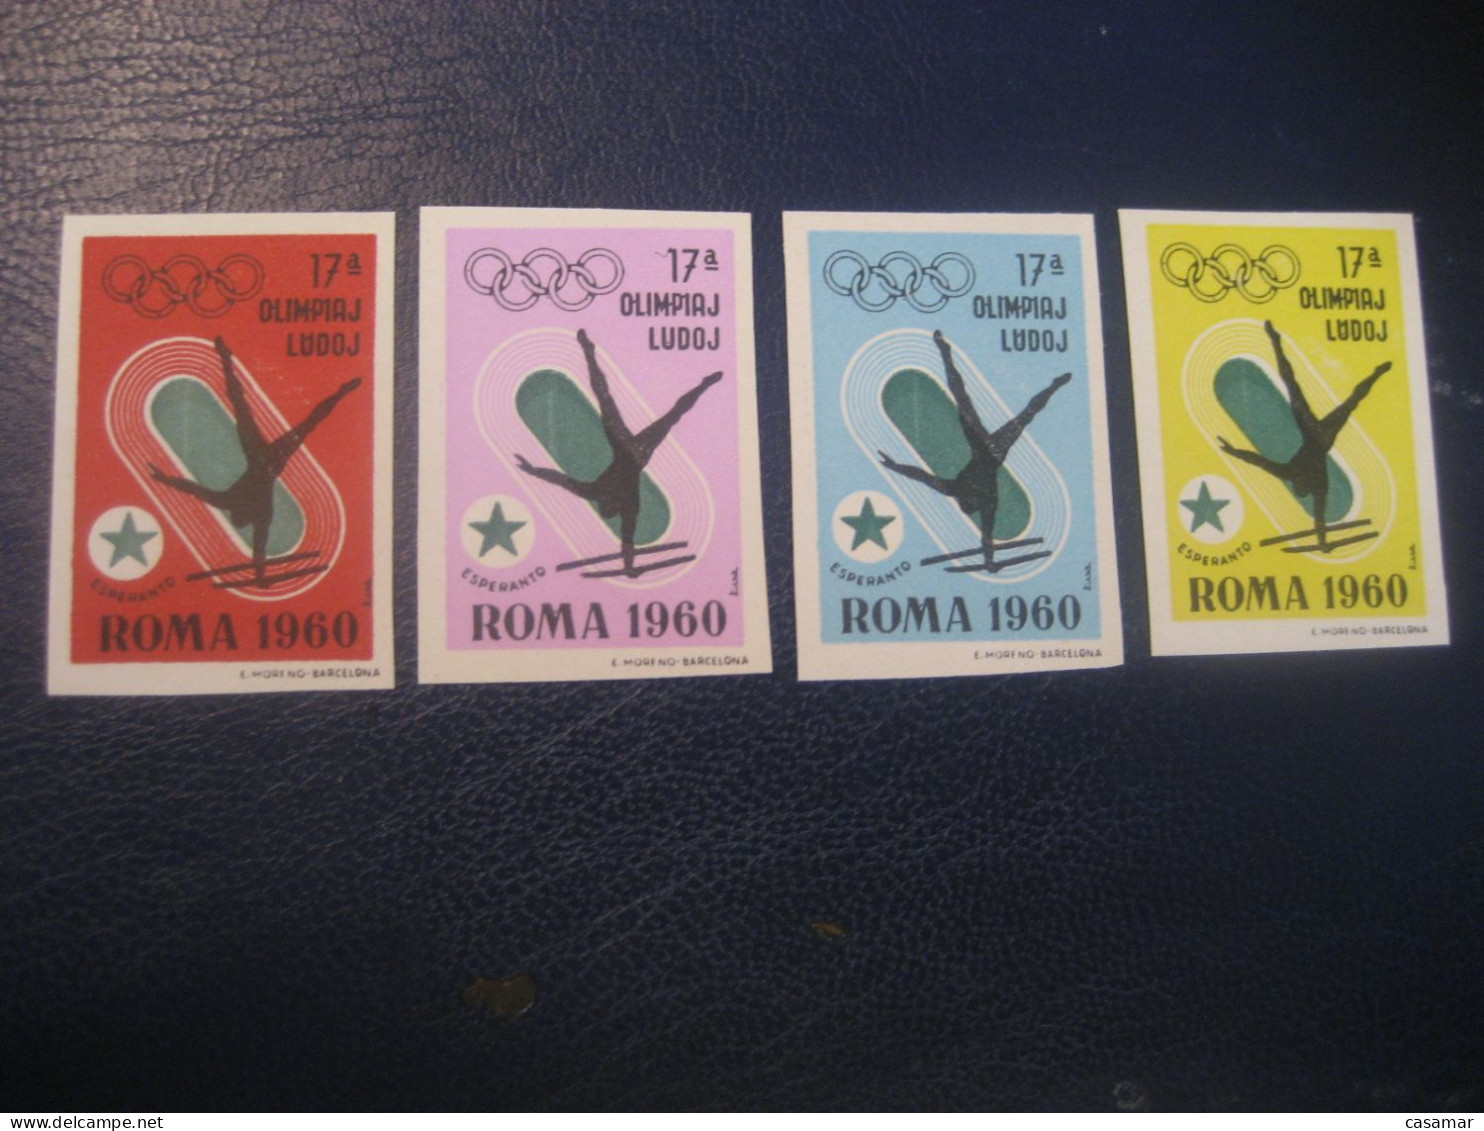 ROMA 1960 Gymnastics Gymnastique Olympic Games Olympics Esperanto 4 Imperforated Poster Stamp Vignette ITALY Spain Label - Gymnastics